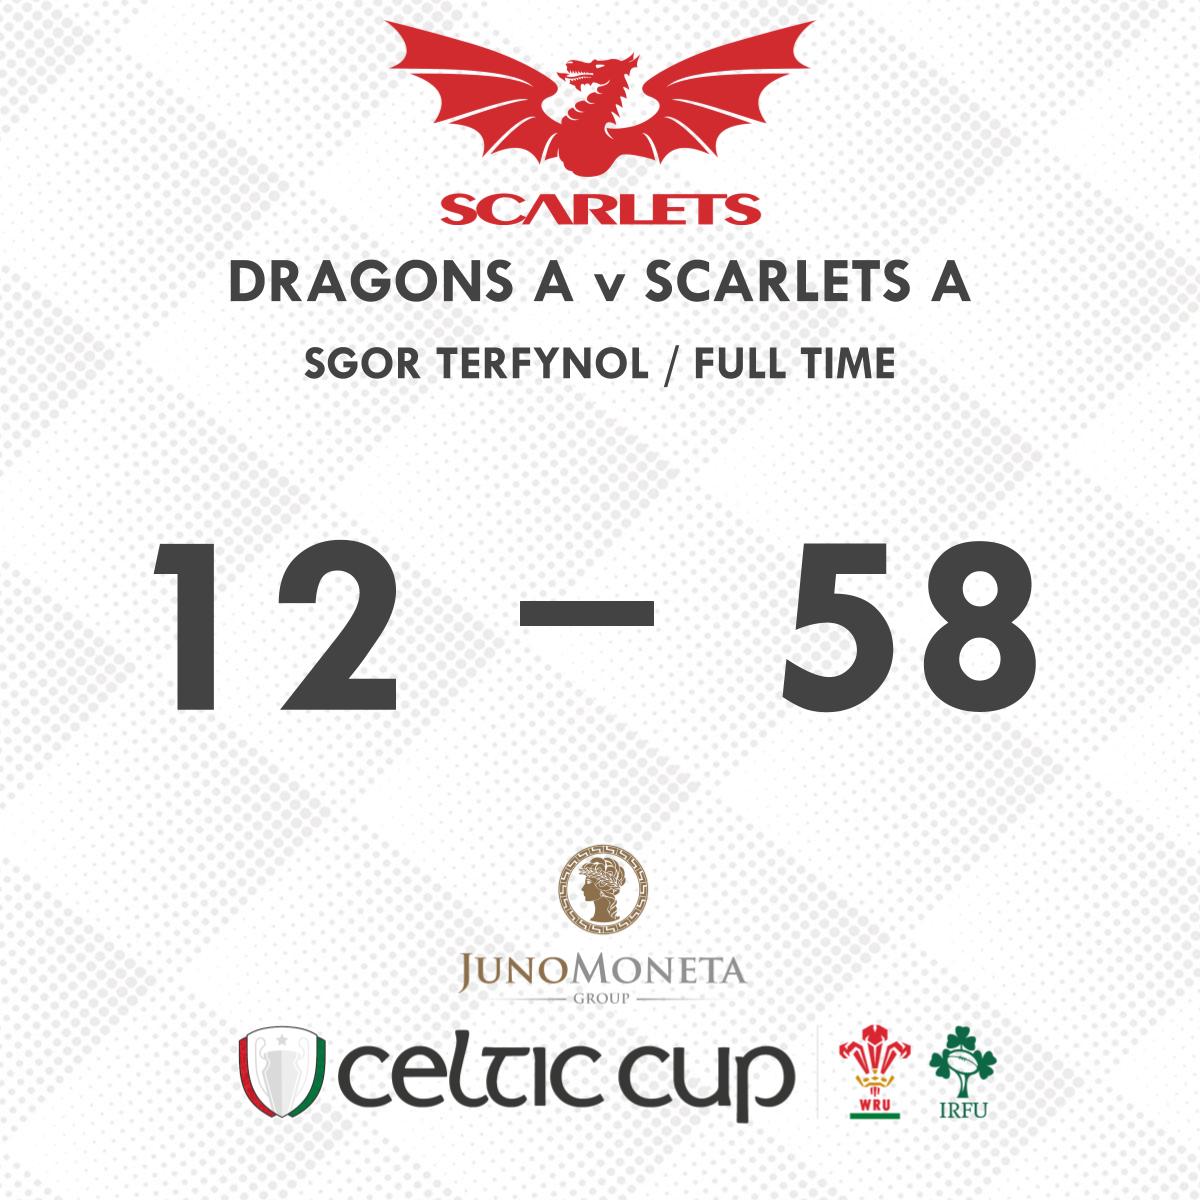 Full Time | Sgor Terfynol  Dragons 12 Scarlets 58  #celticcup #CwpanGeltaidd https://t.co/jZIVHhwoDe